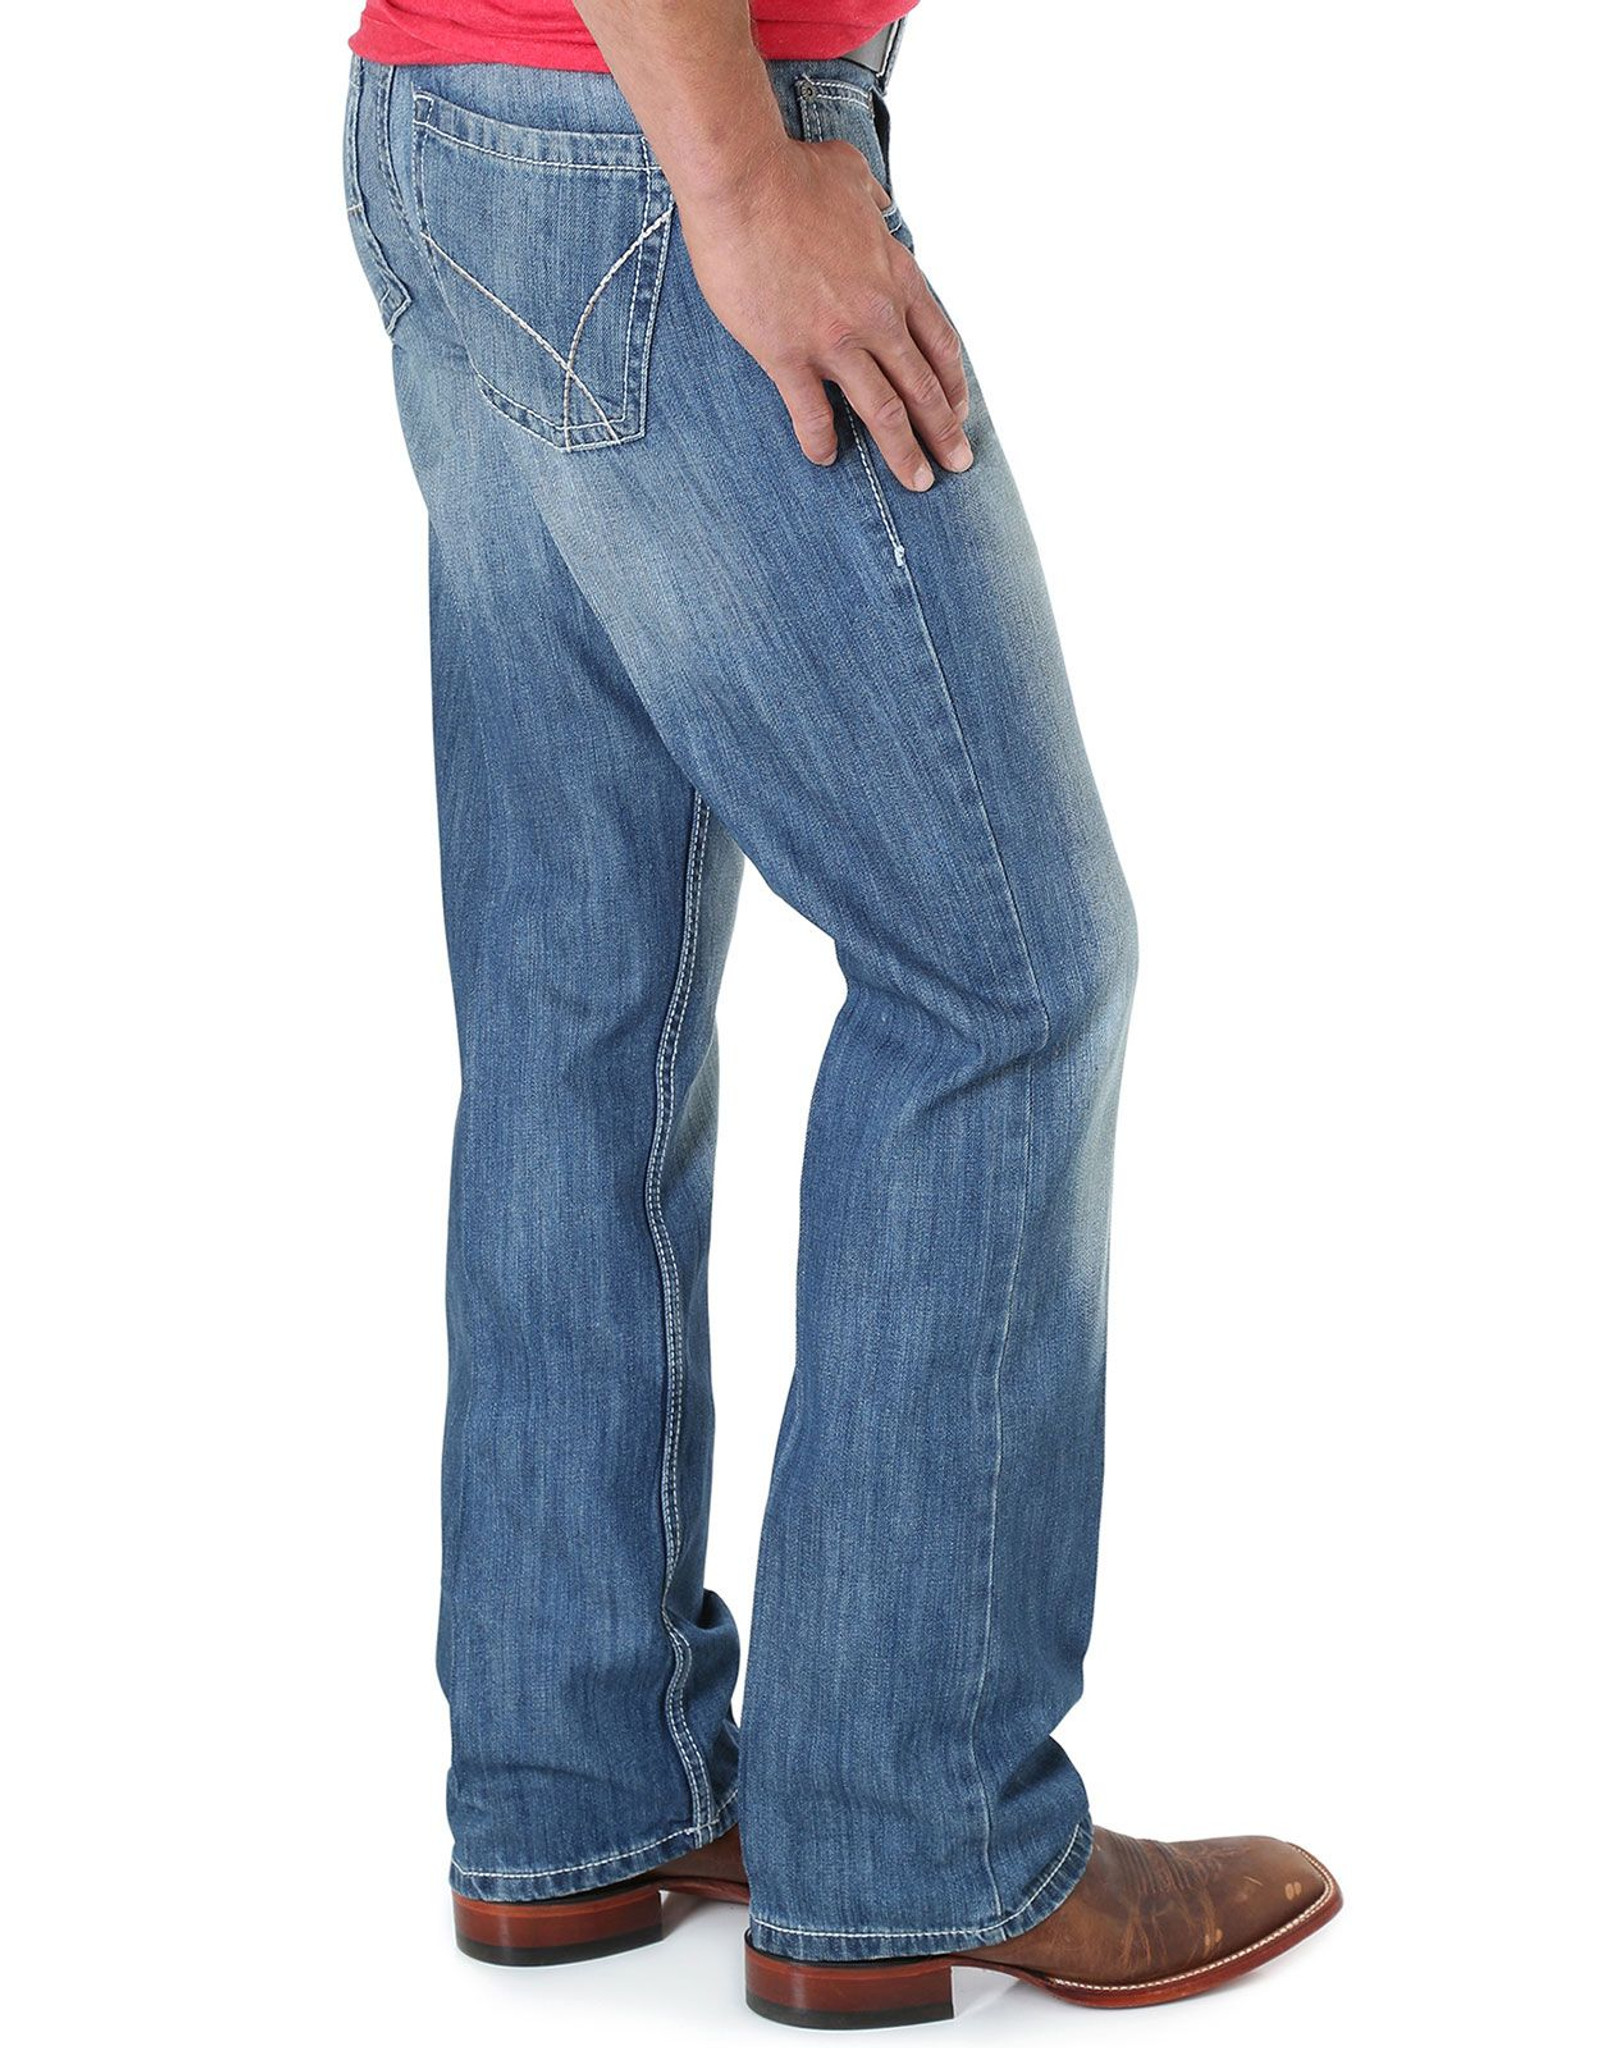 Wrangler 20X Style 42 Bootcut Jeans for Men from Langston's